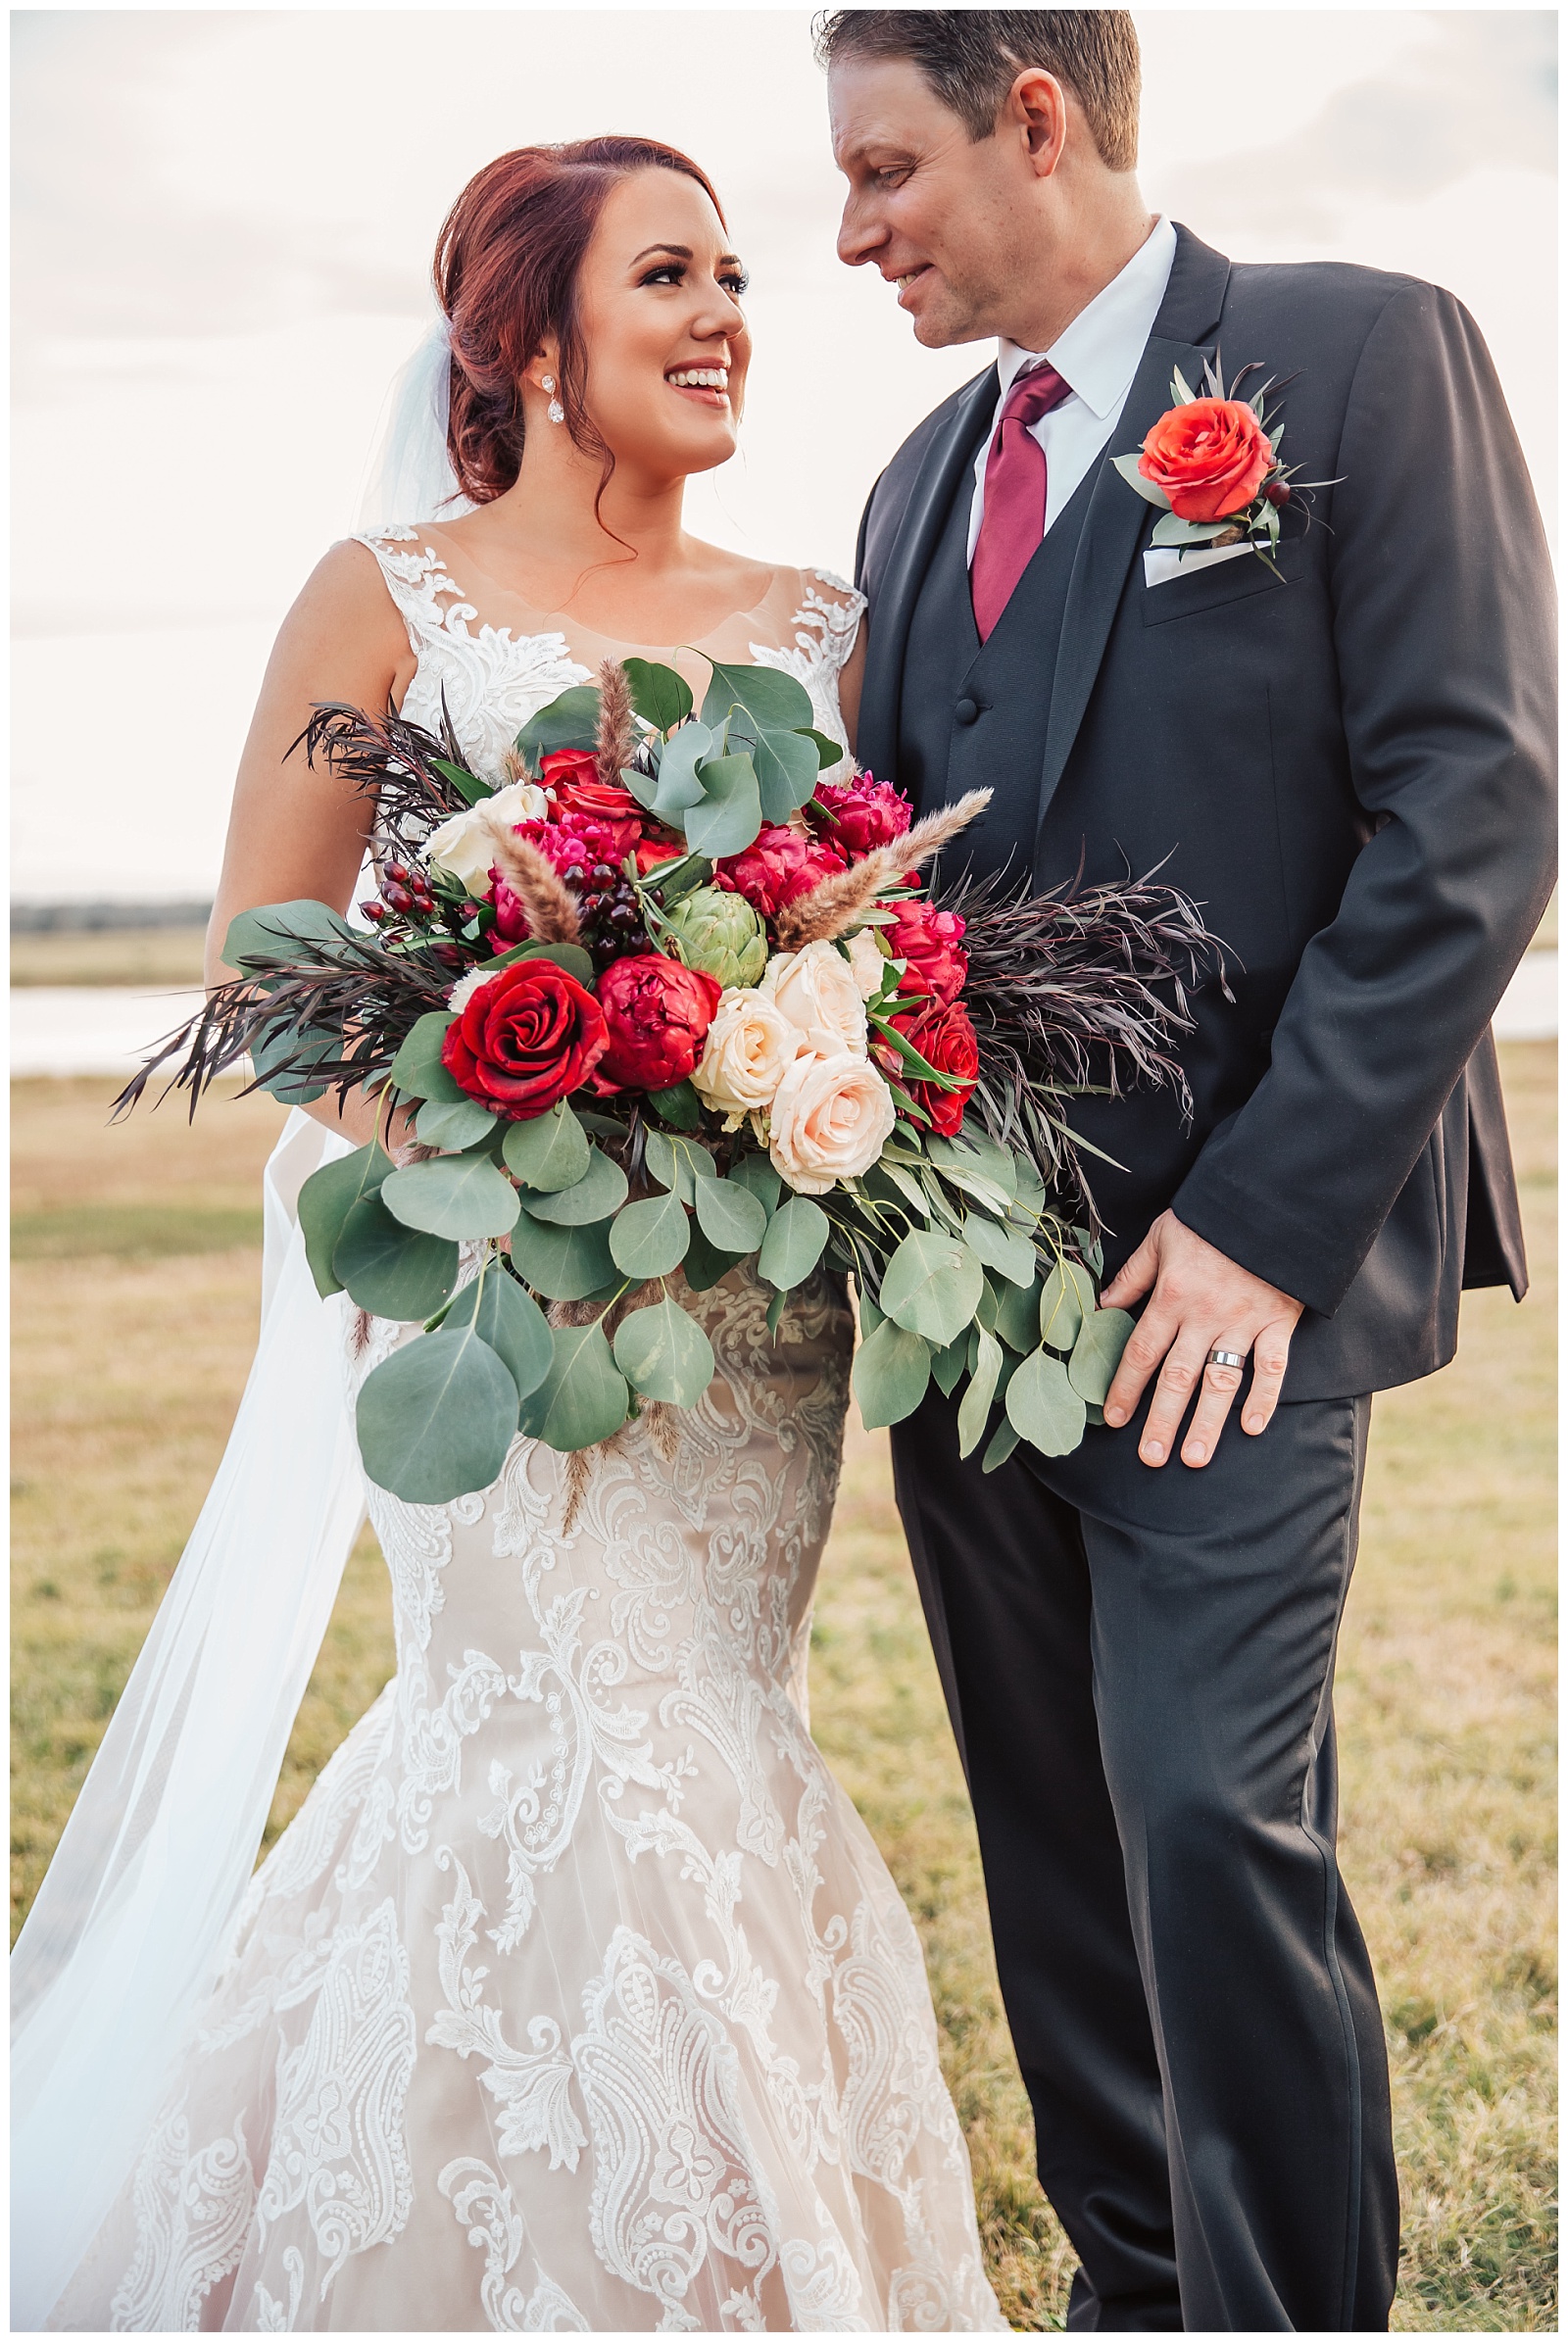 Glam Burgundy and Blush Wedding | Couple and beautiful bridal bouquet at Emery's Buffalo Creek